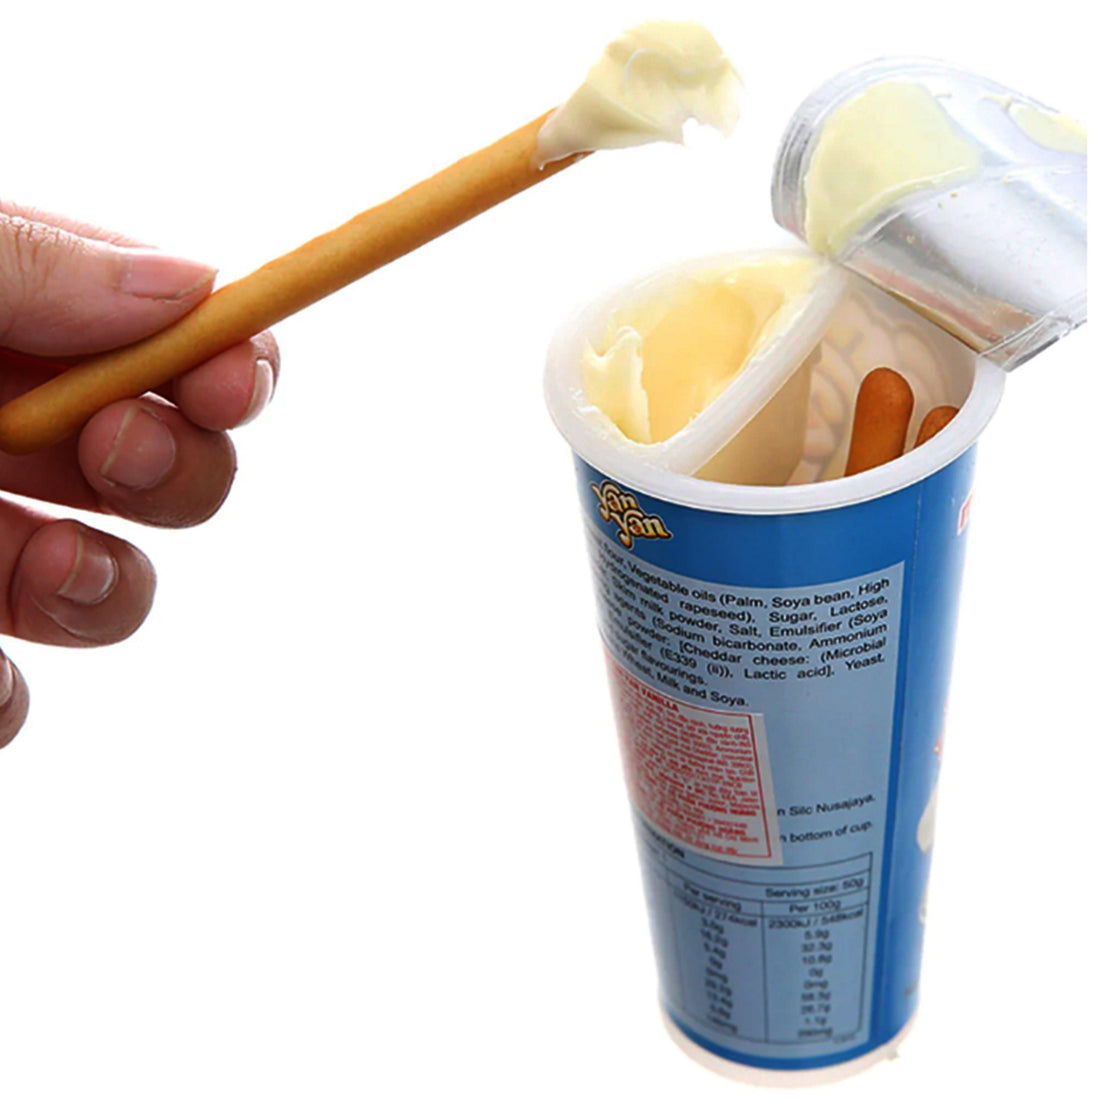 Meiji Yan Yan Cracker Stick With Dip - Vanilla Cream 2oz – Anytime Basket